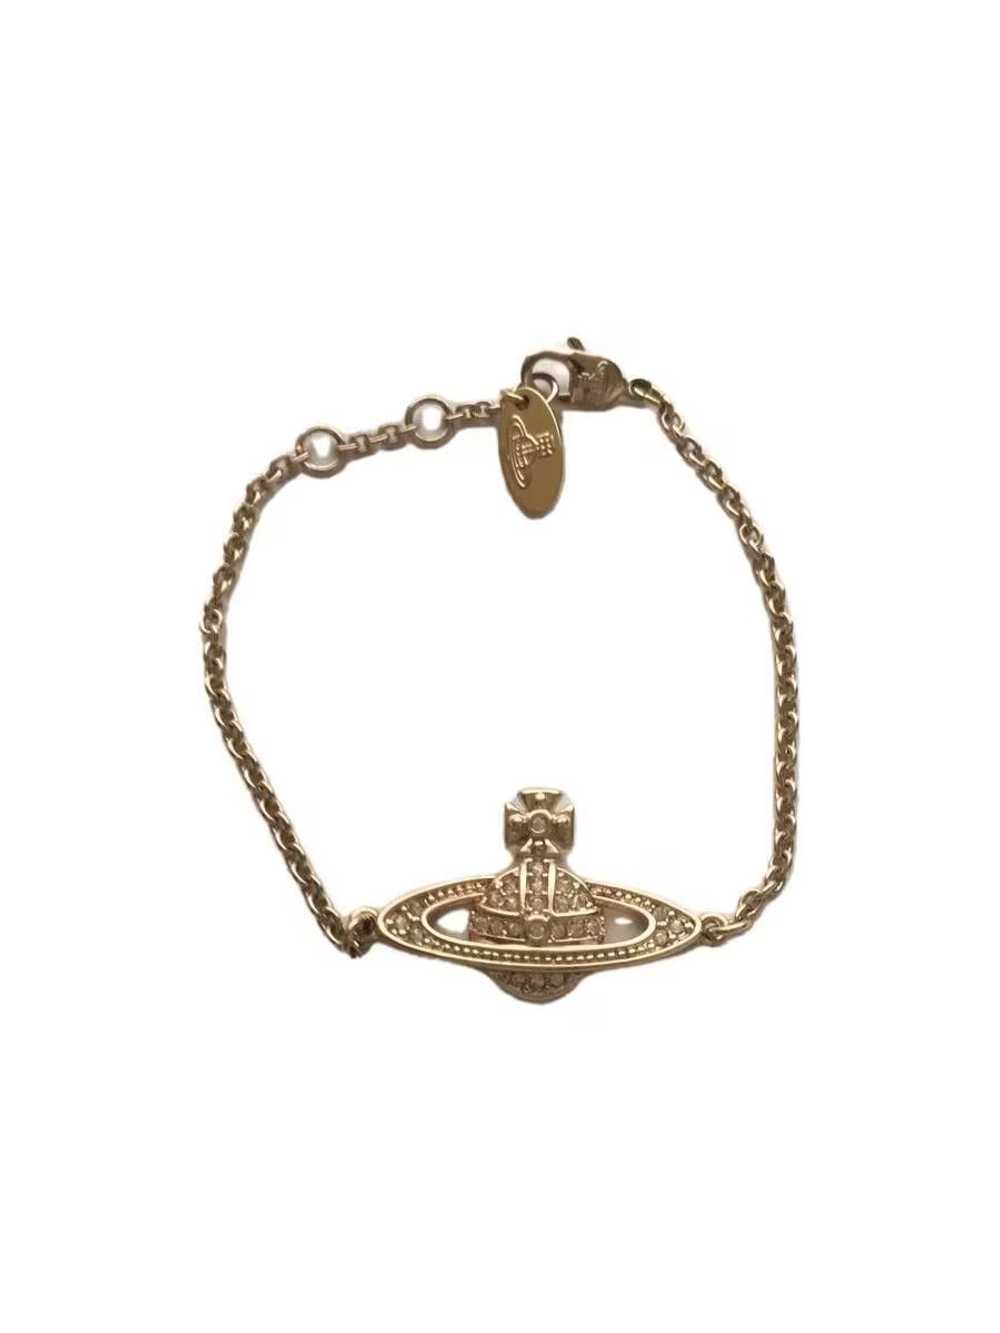 Vivienne Westwood Crystal Orb Bracelet - image 1